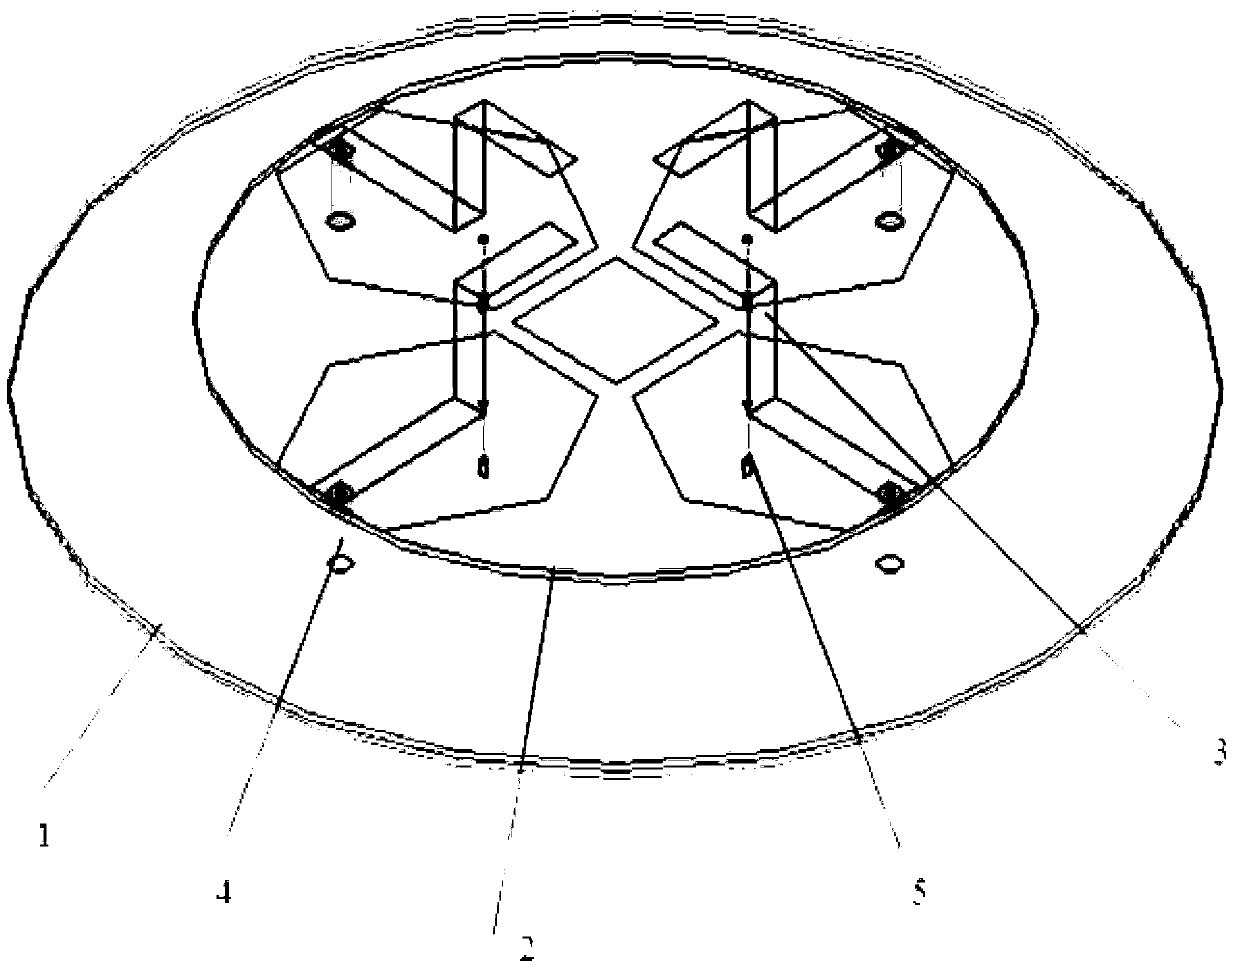 Multi-frequency wide-beam circular polarization antenna